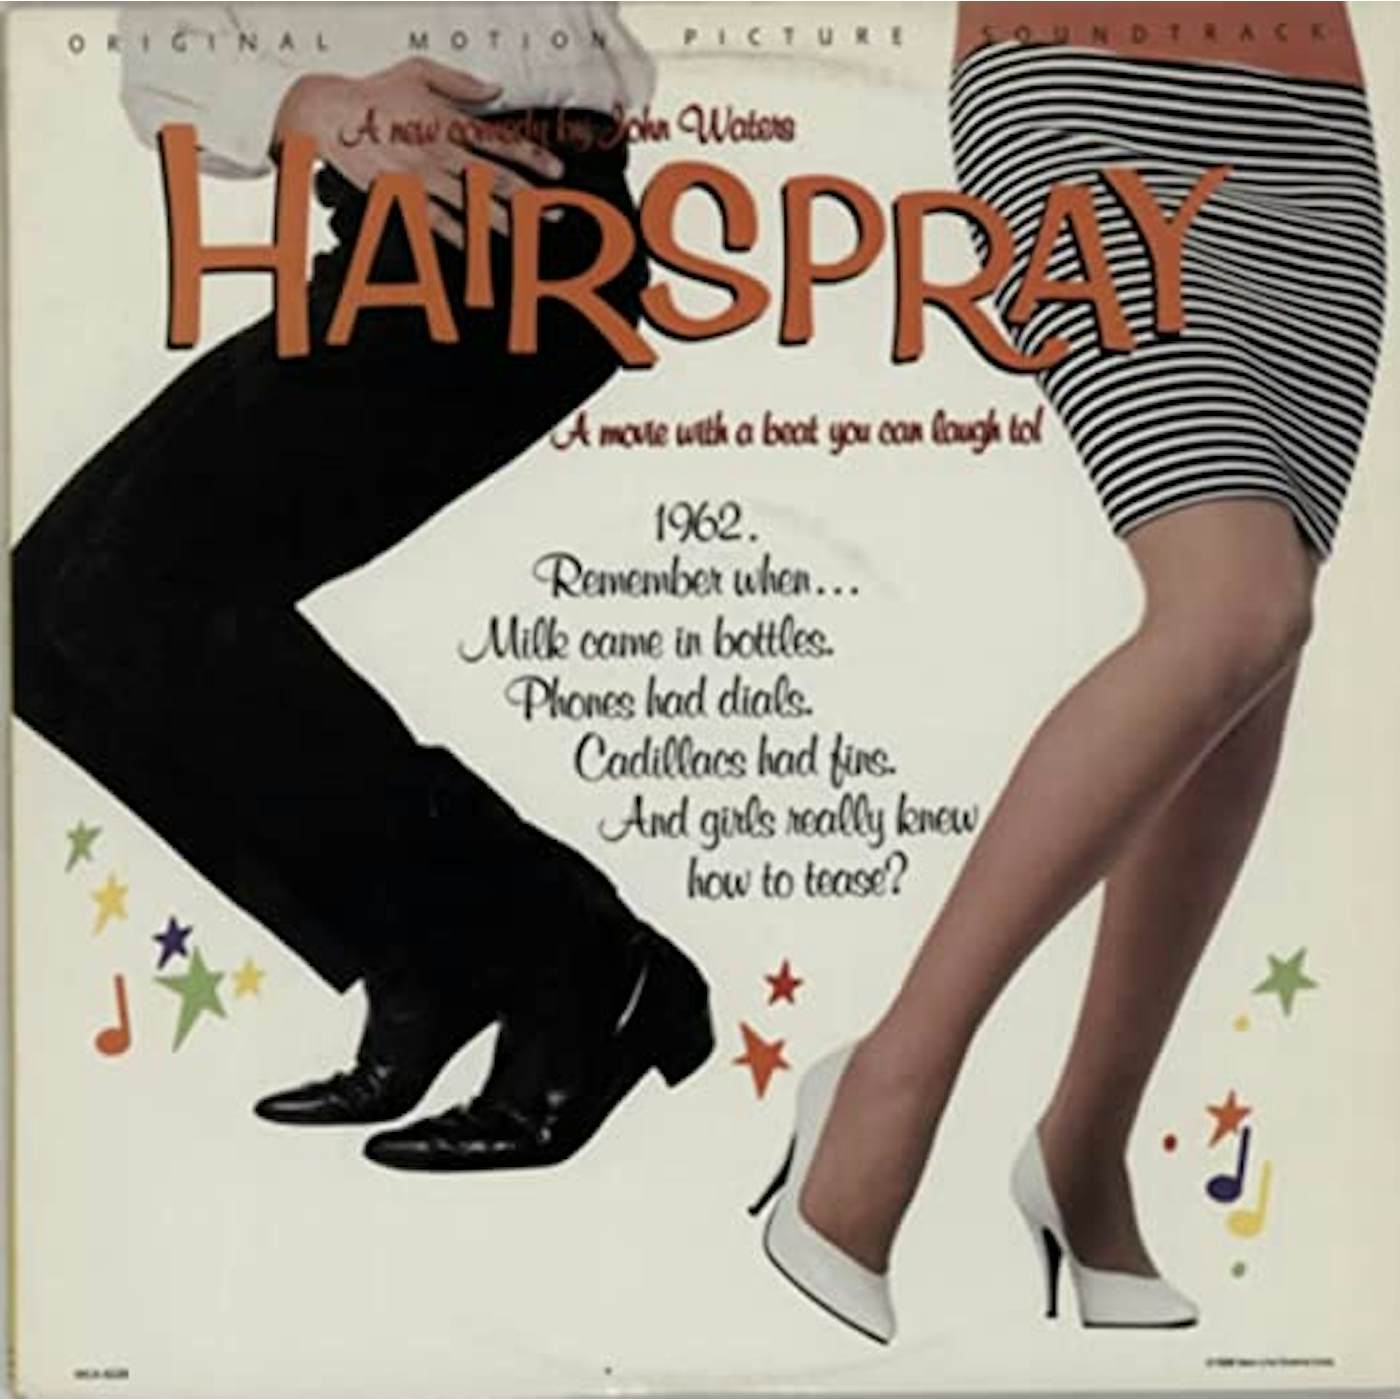 HAIRSPRAY / O.B.C.R. Vinyl Record